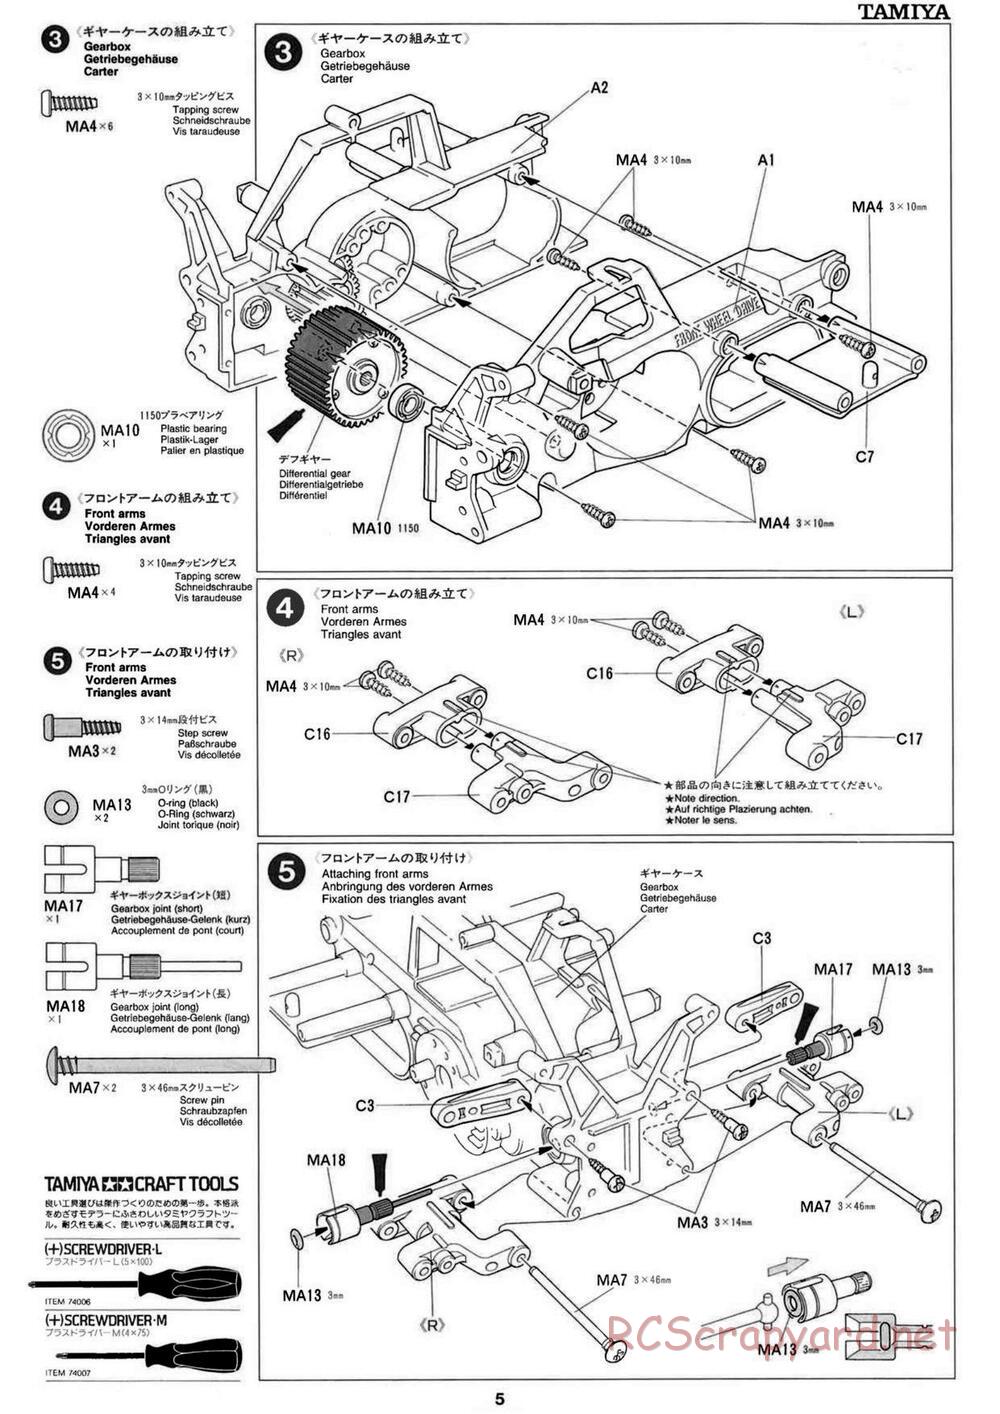 Tamiya - FF-02 Chassis - Manual - Page 5